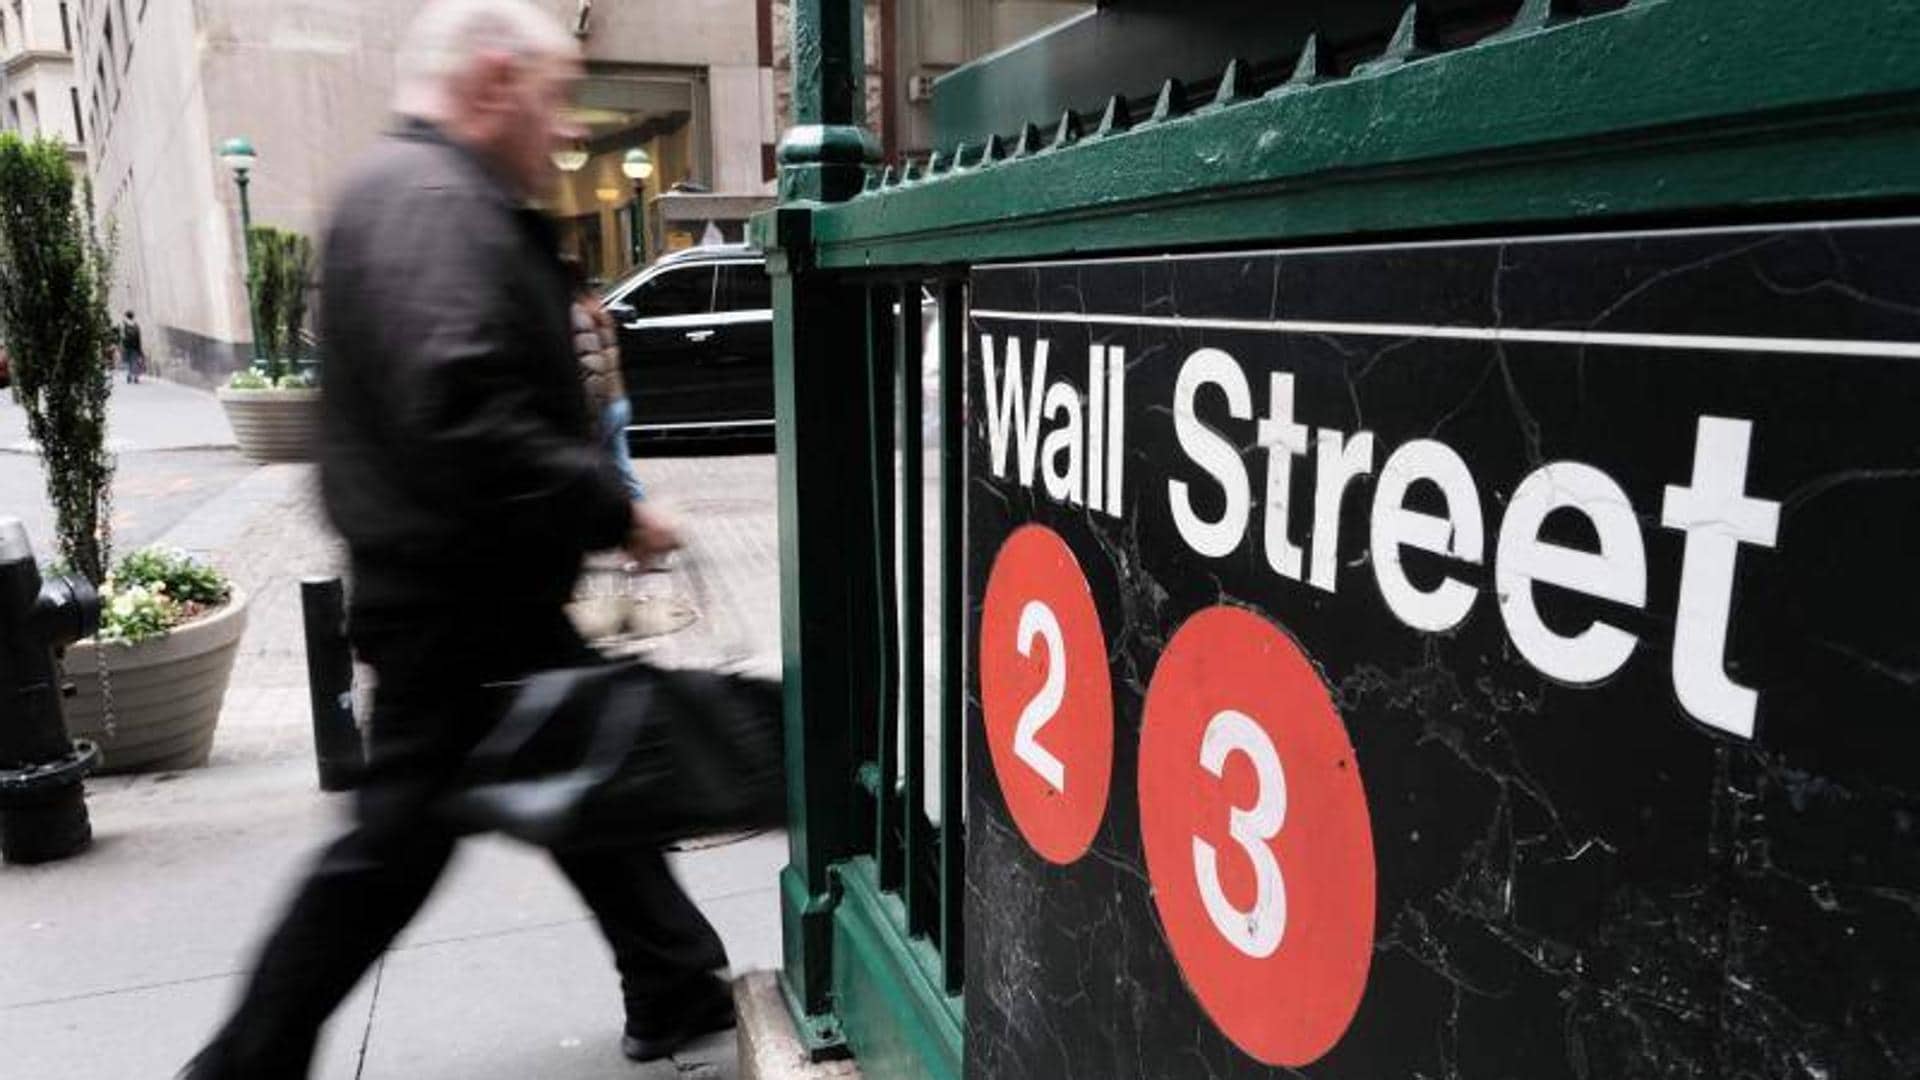 The Stock Market cuts its bullish streak pressured by energy values